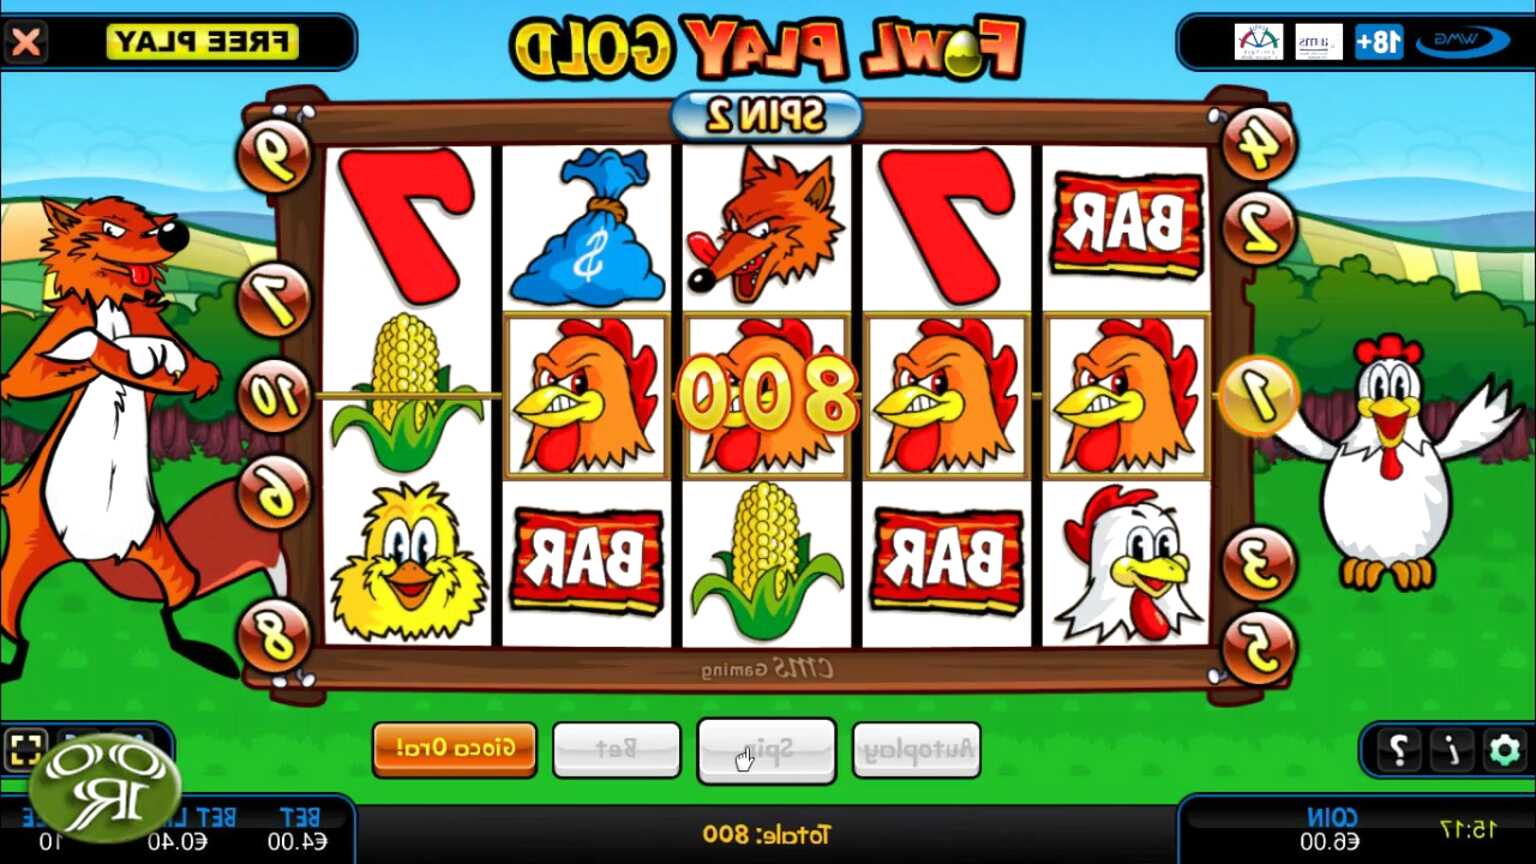 Giochi slot machine gratis gallina